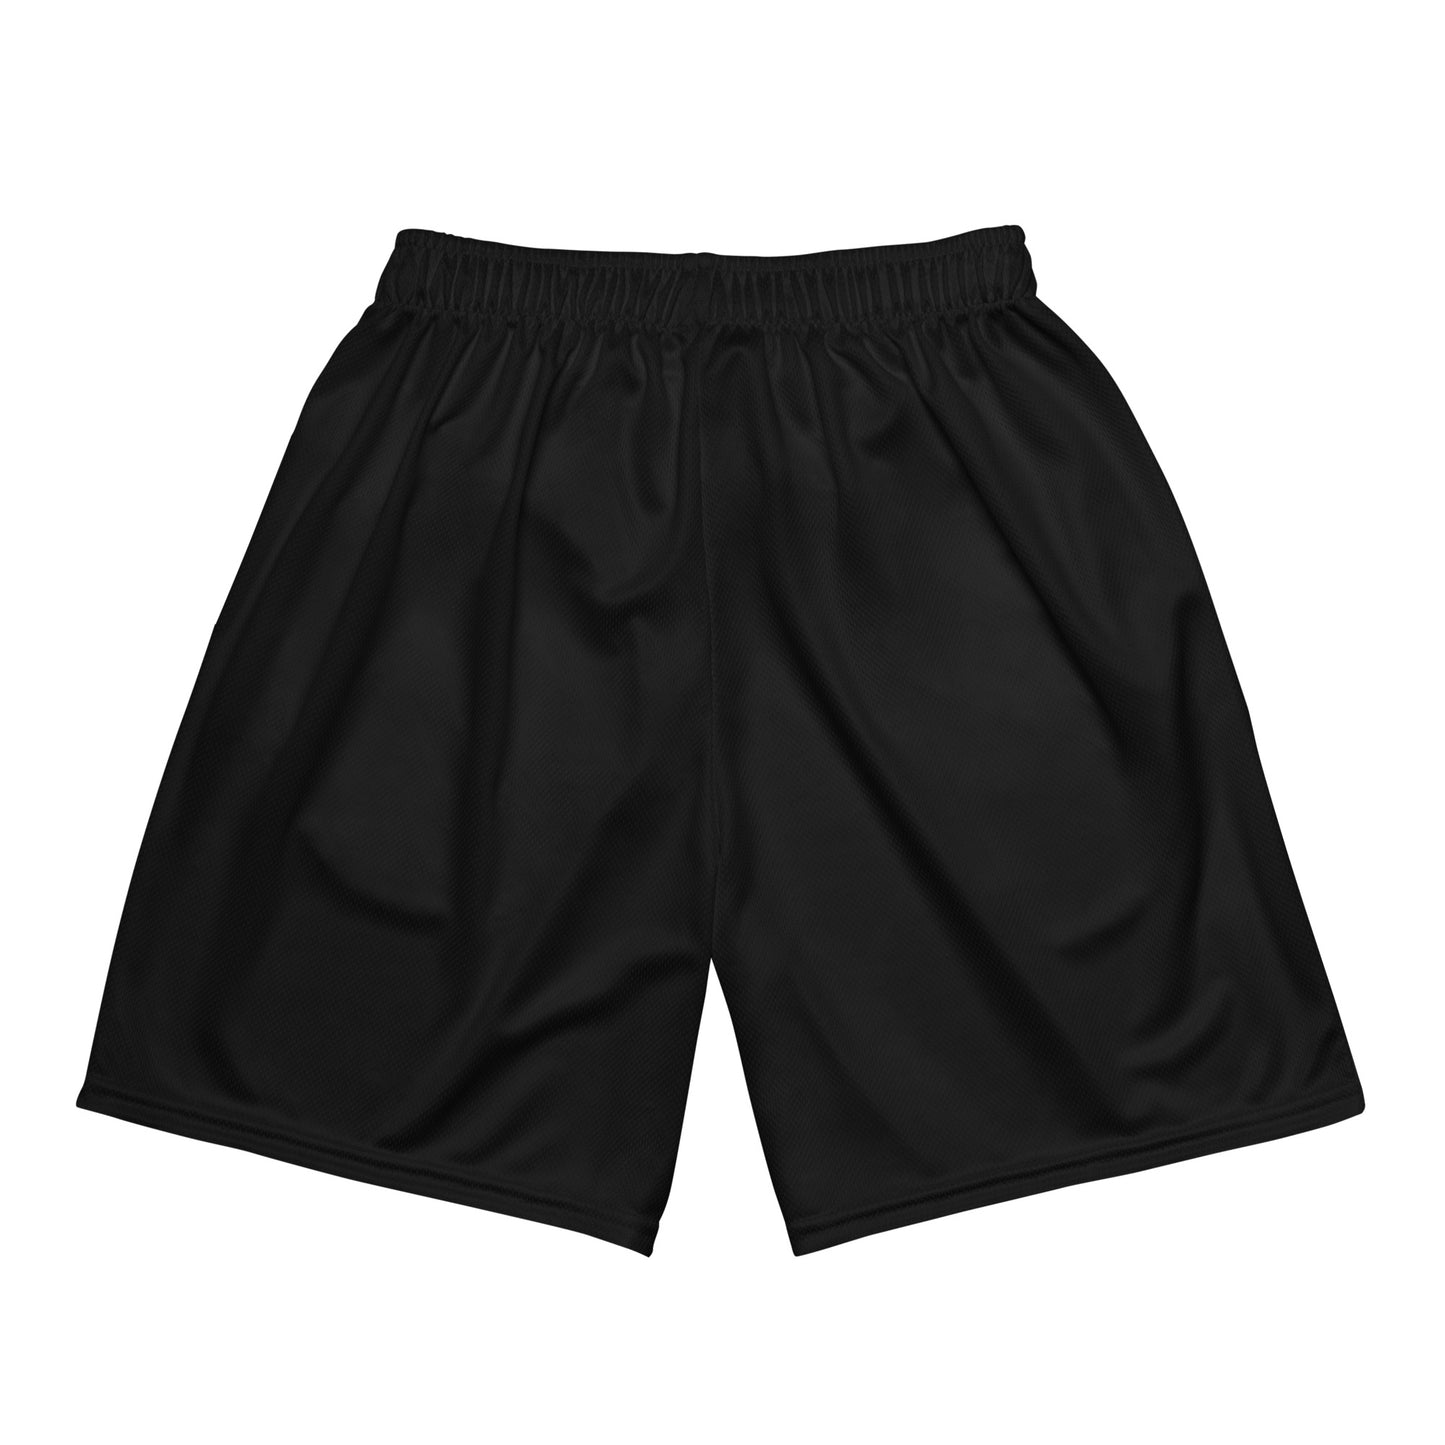 REHH - Mesh Shorts (Black)